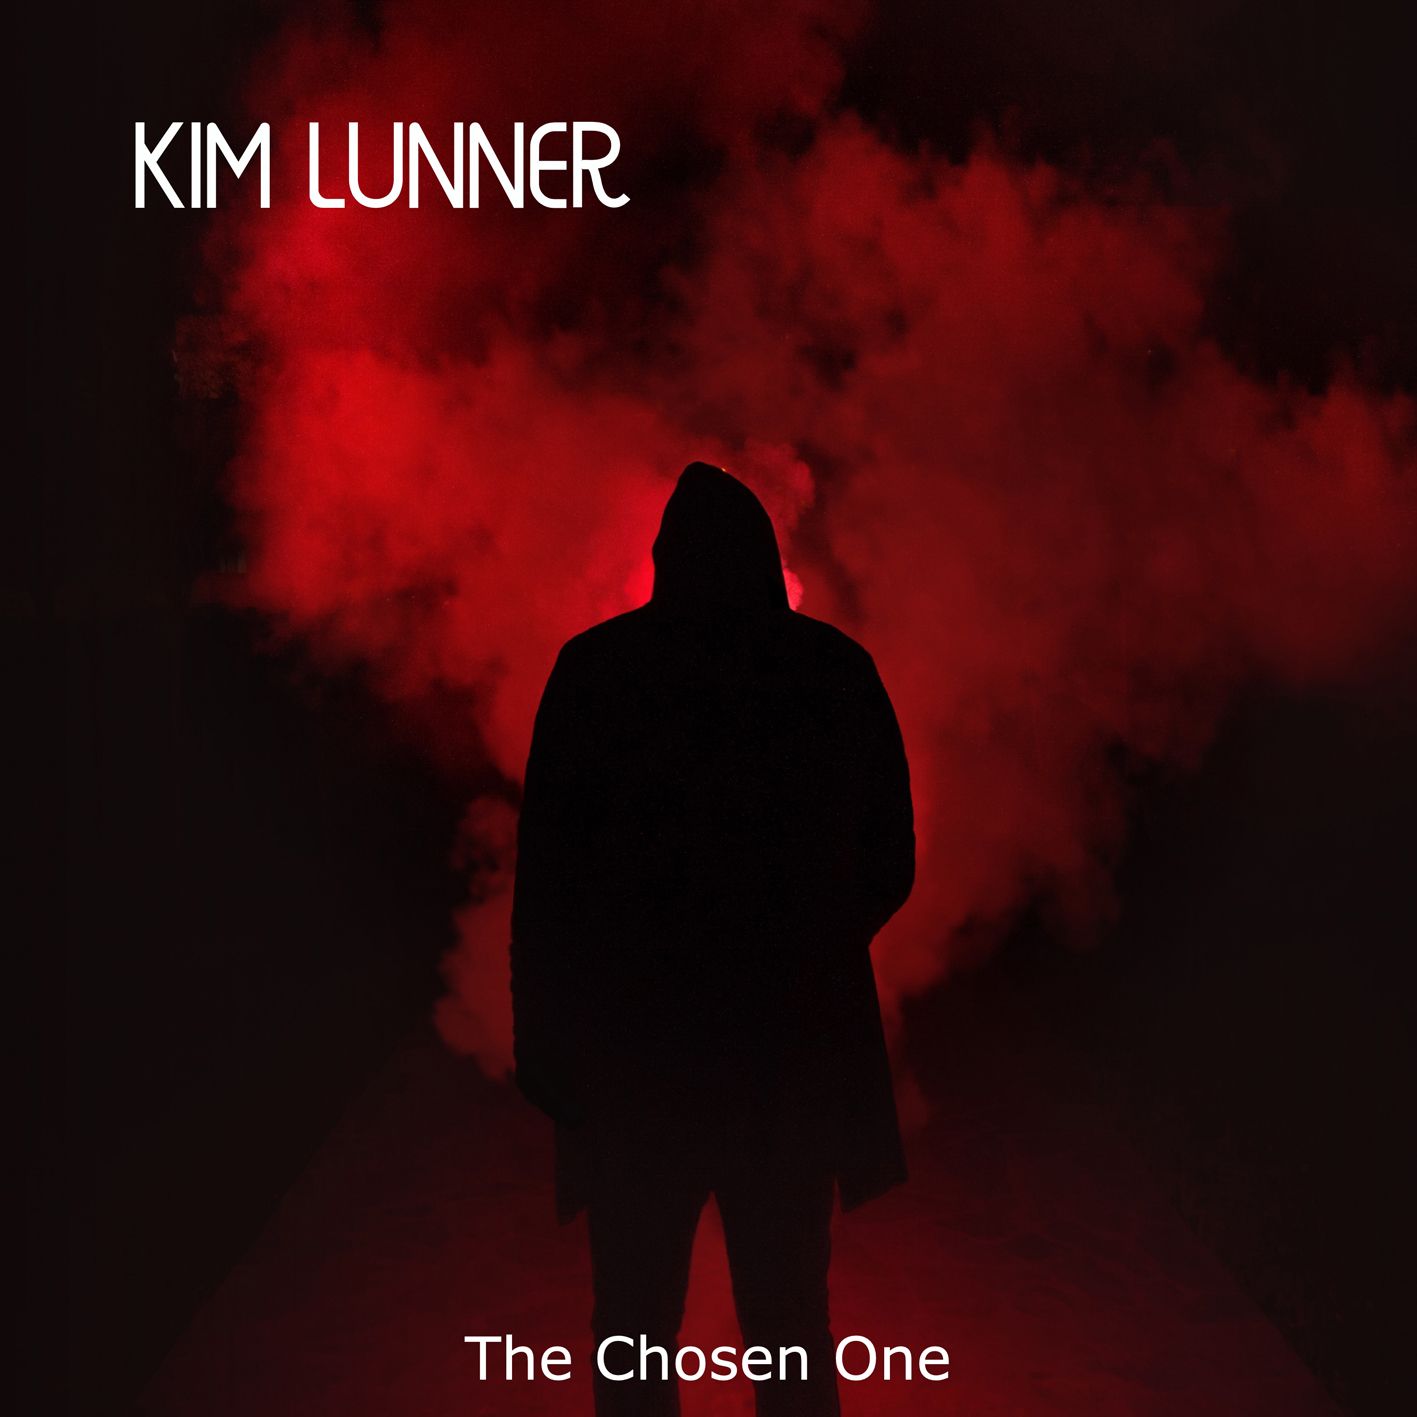 Kim lunner – The Chosen One EP 2021